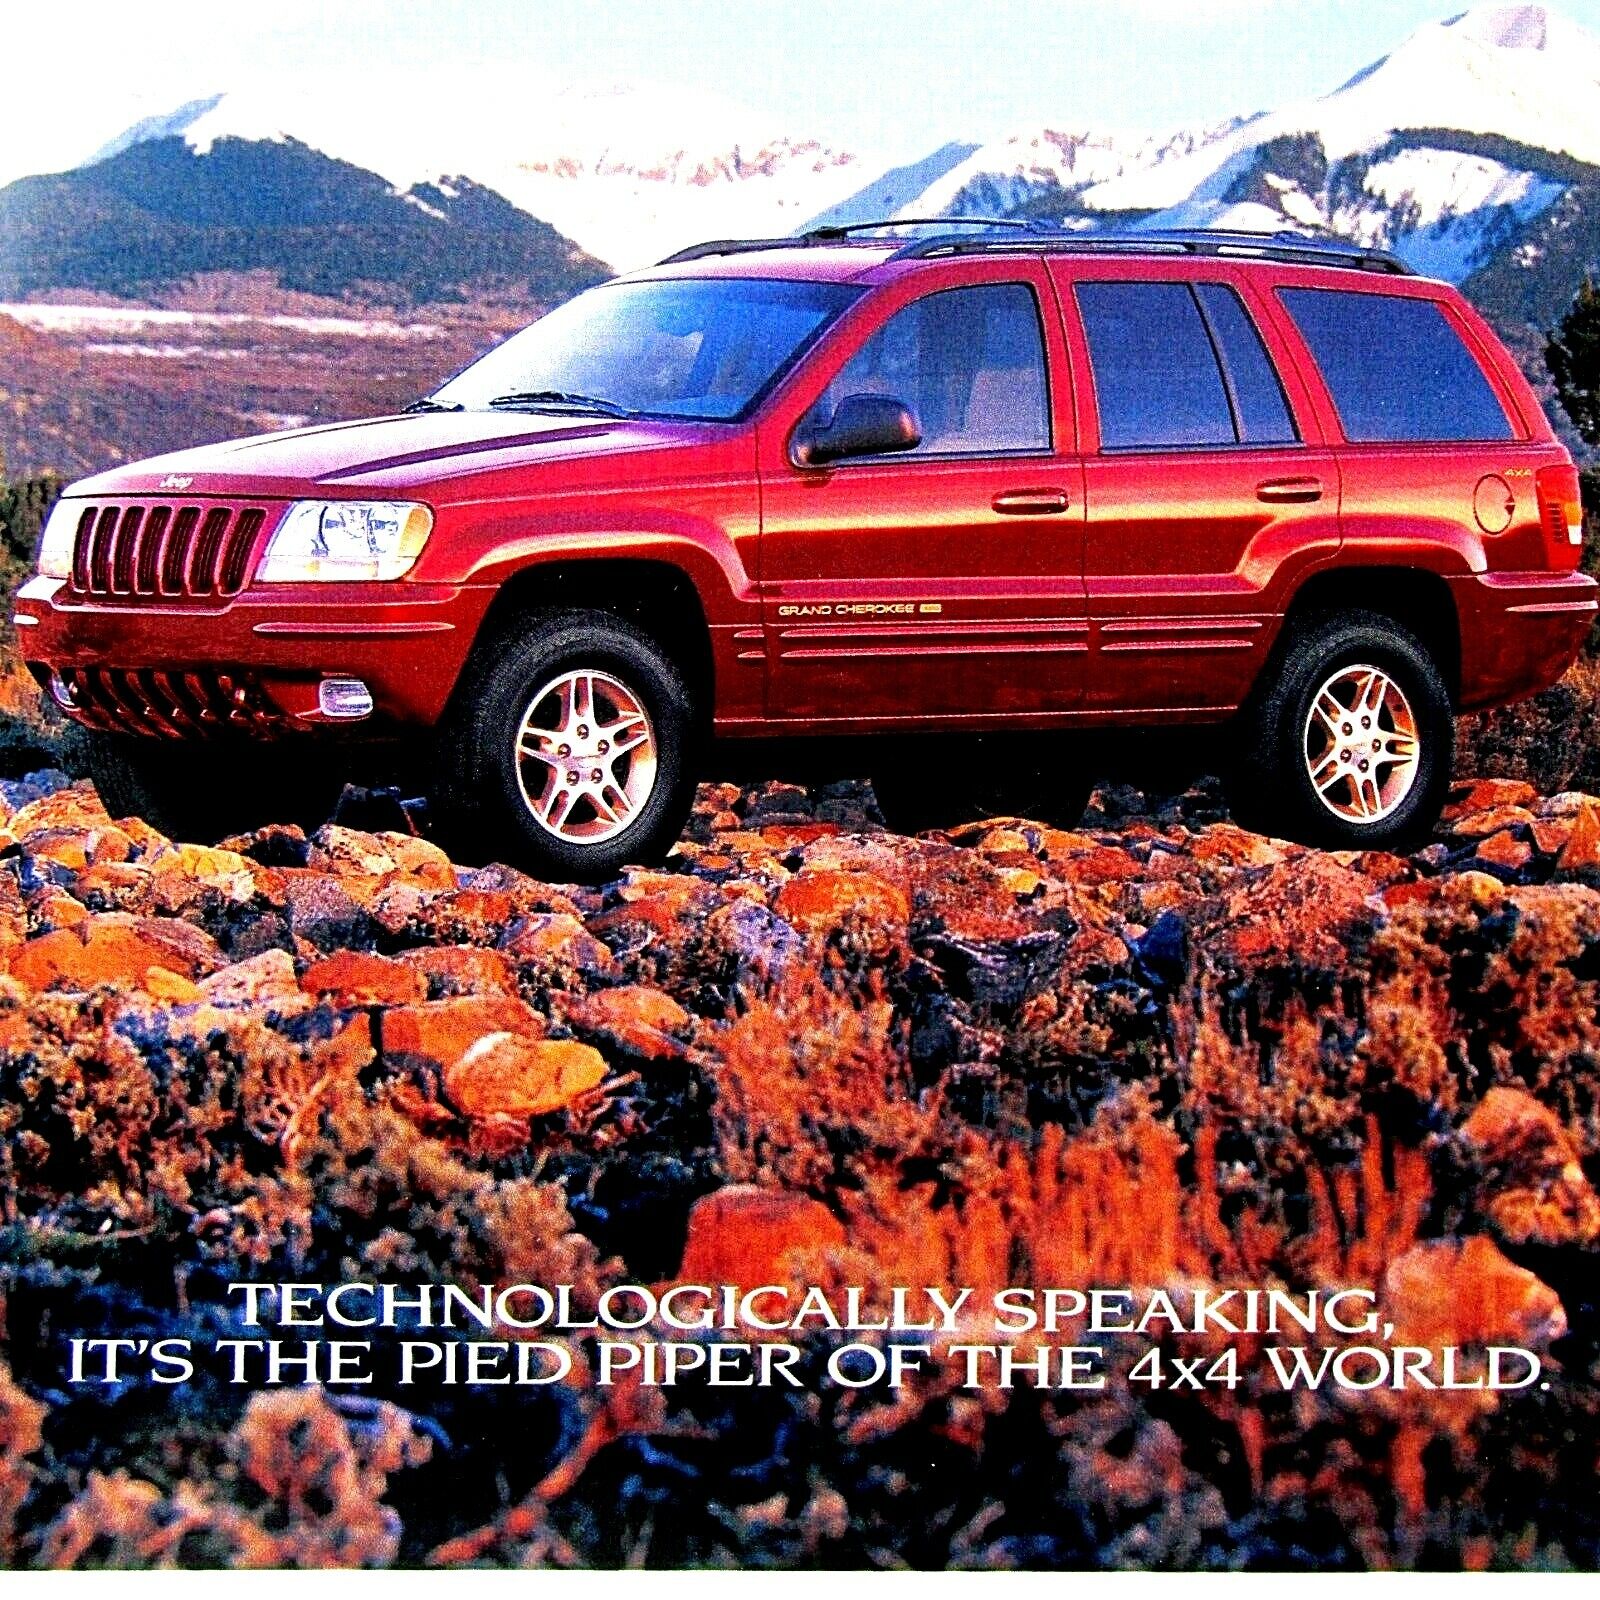 1999 Jeep Grand Cherokee Vintage Red Original Print Ad 8.5 x 11\